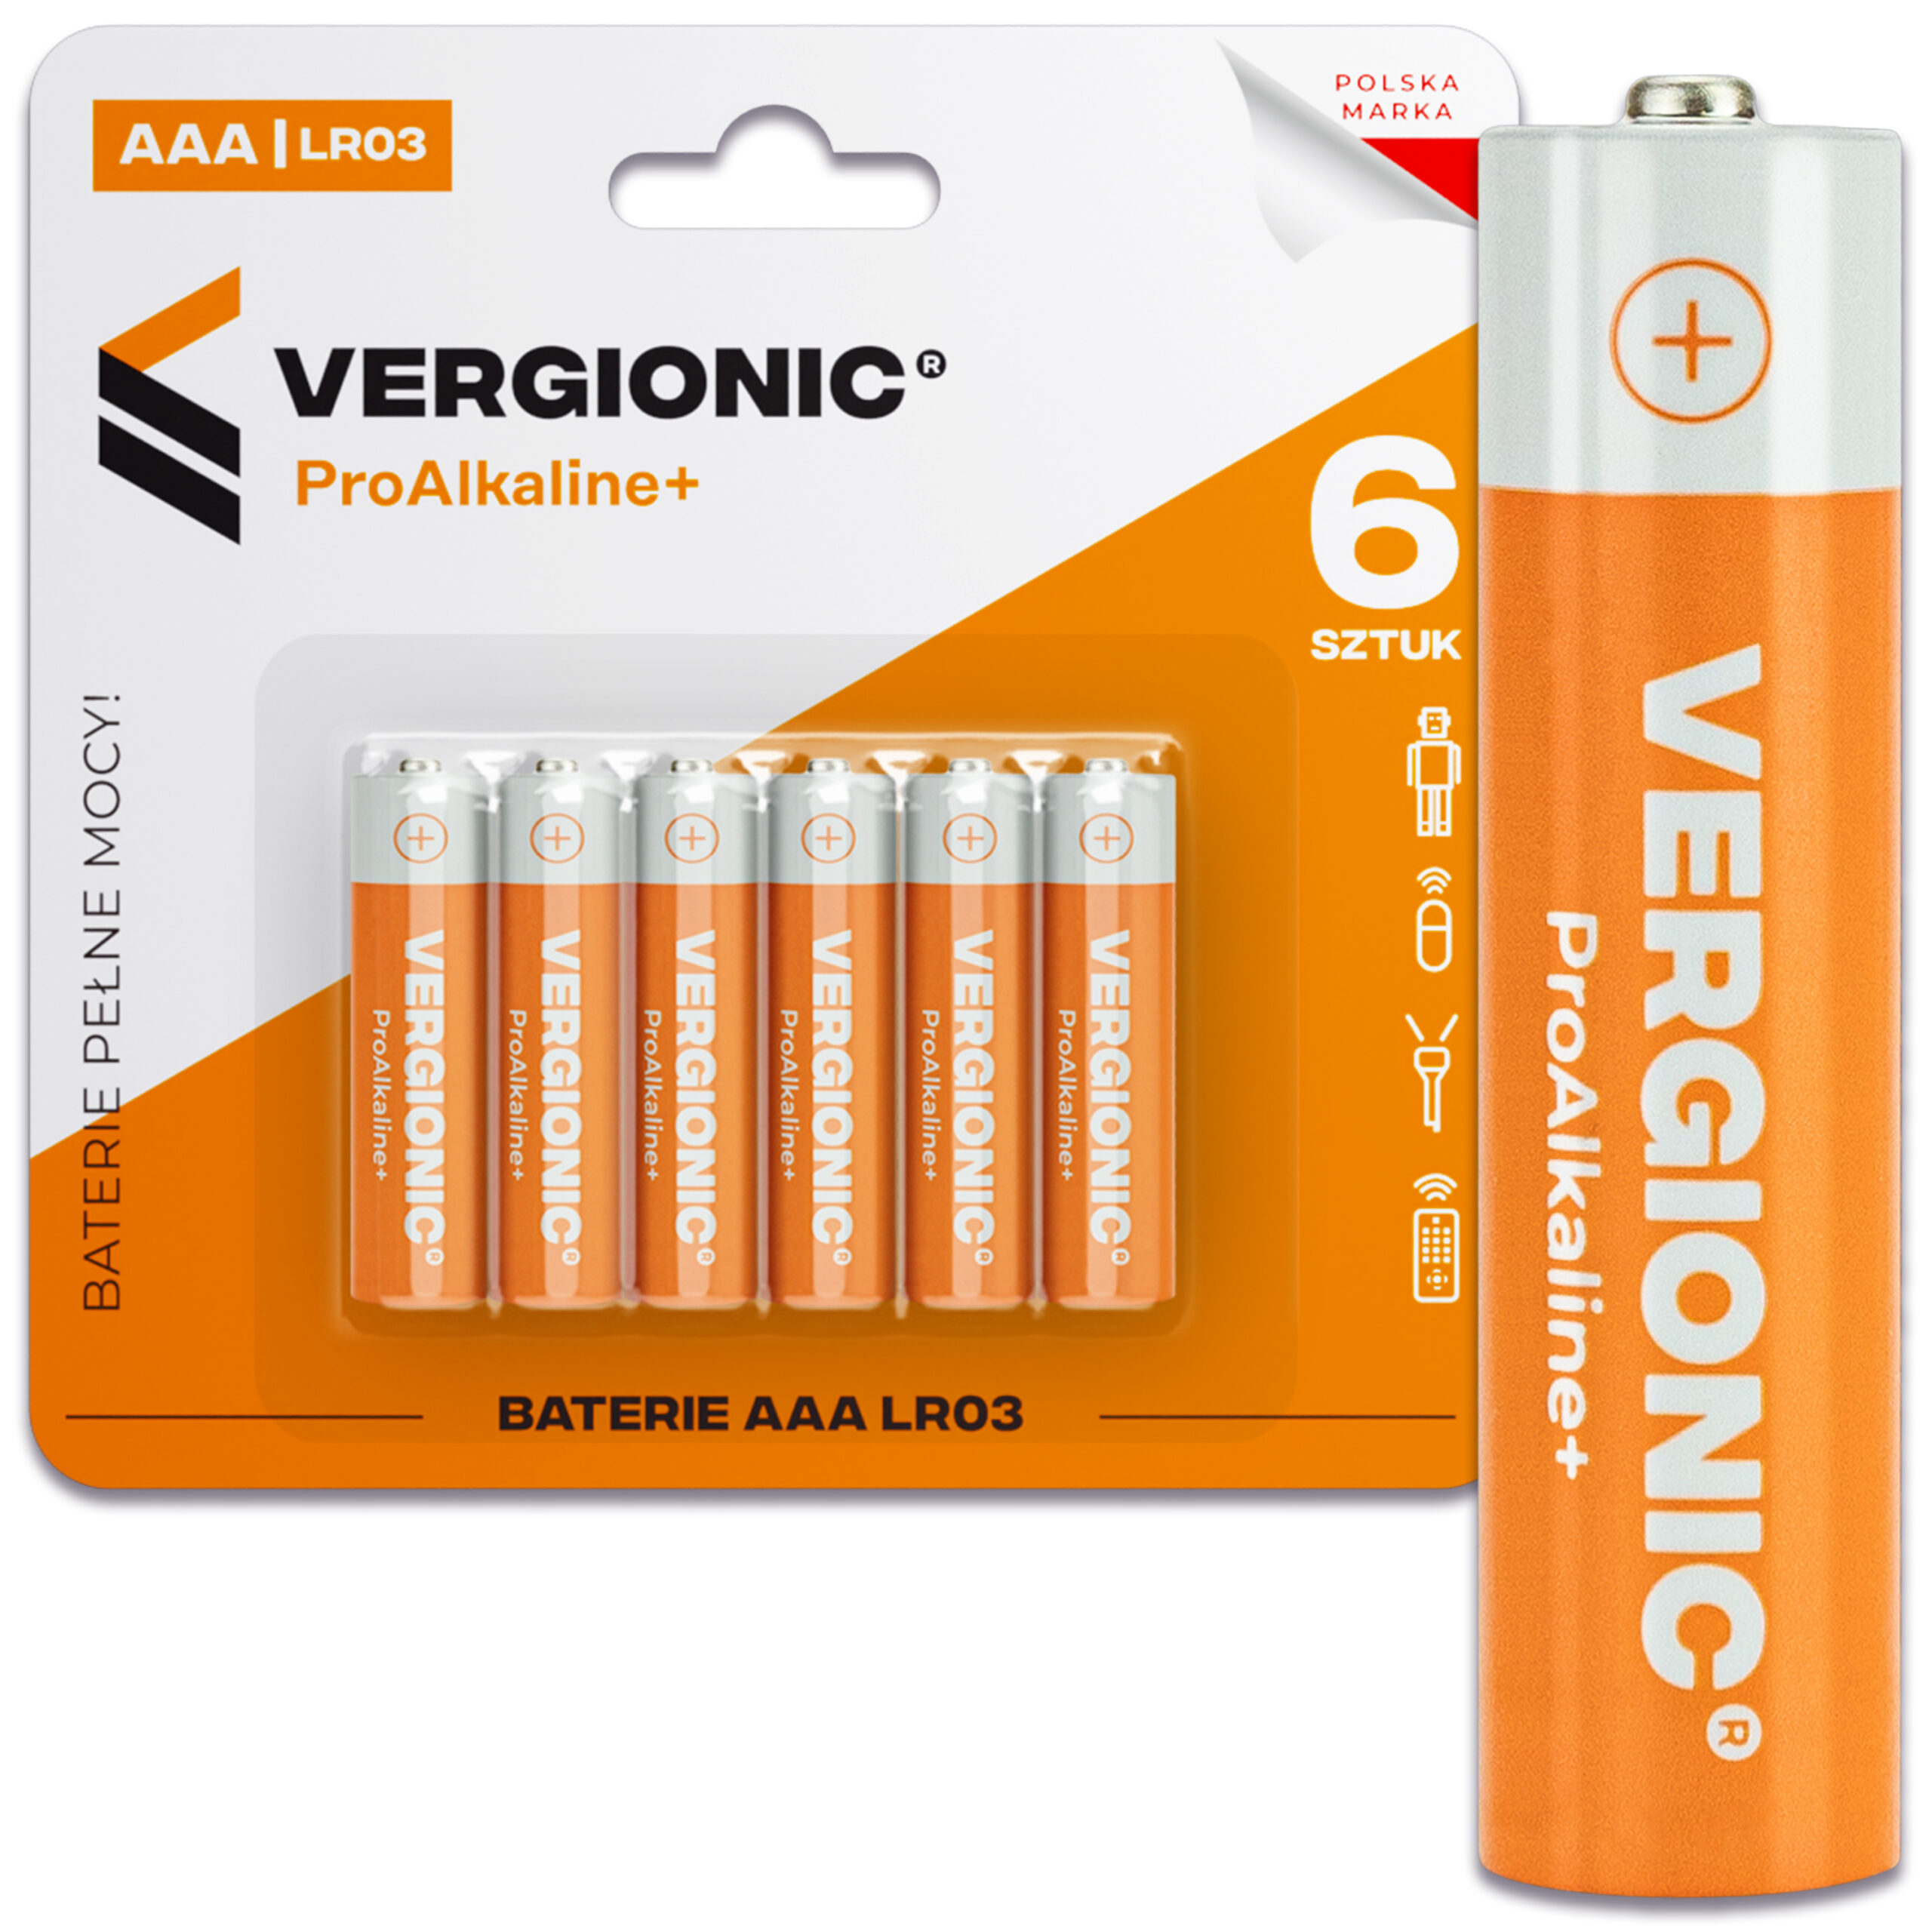 Baterie alkaliczne 6 szt. AAA LR03 VERGIONIC 0822_16